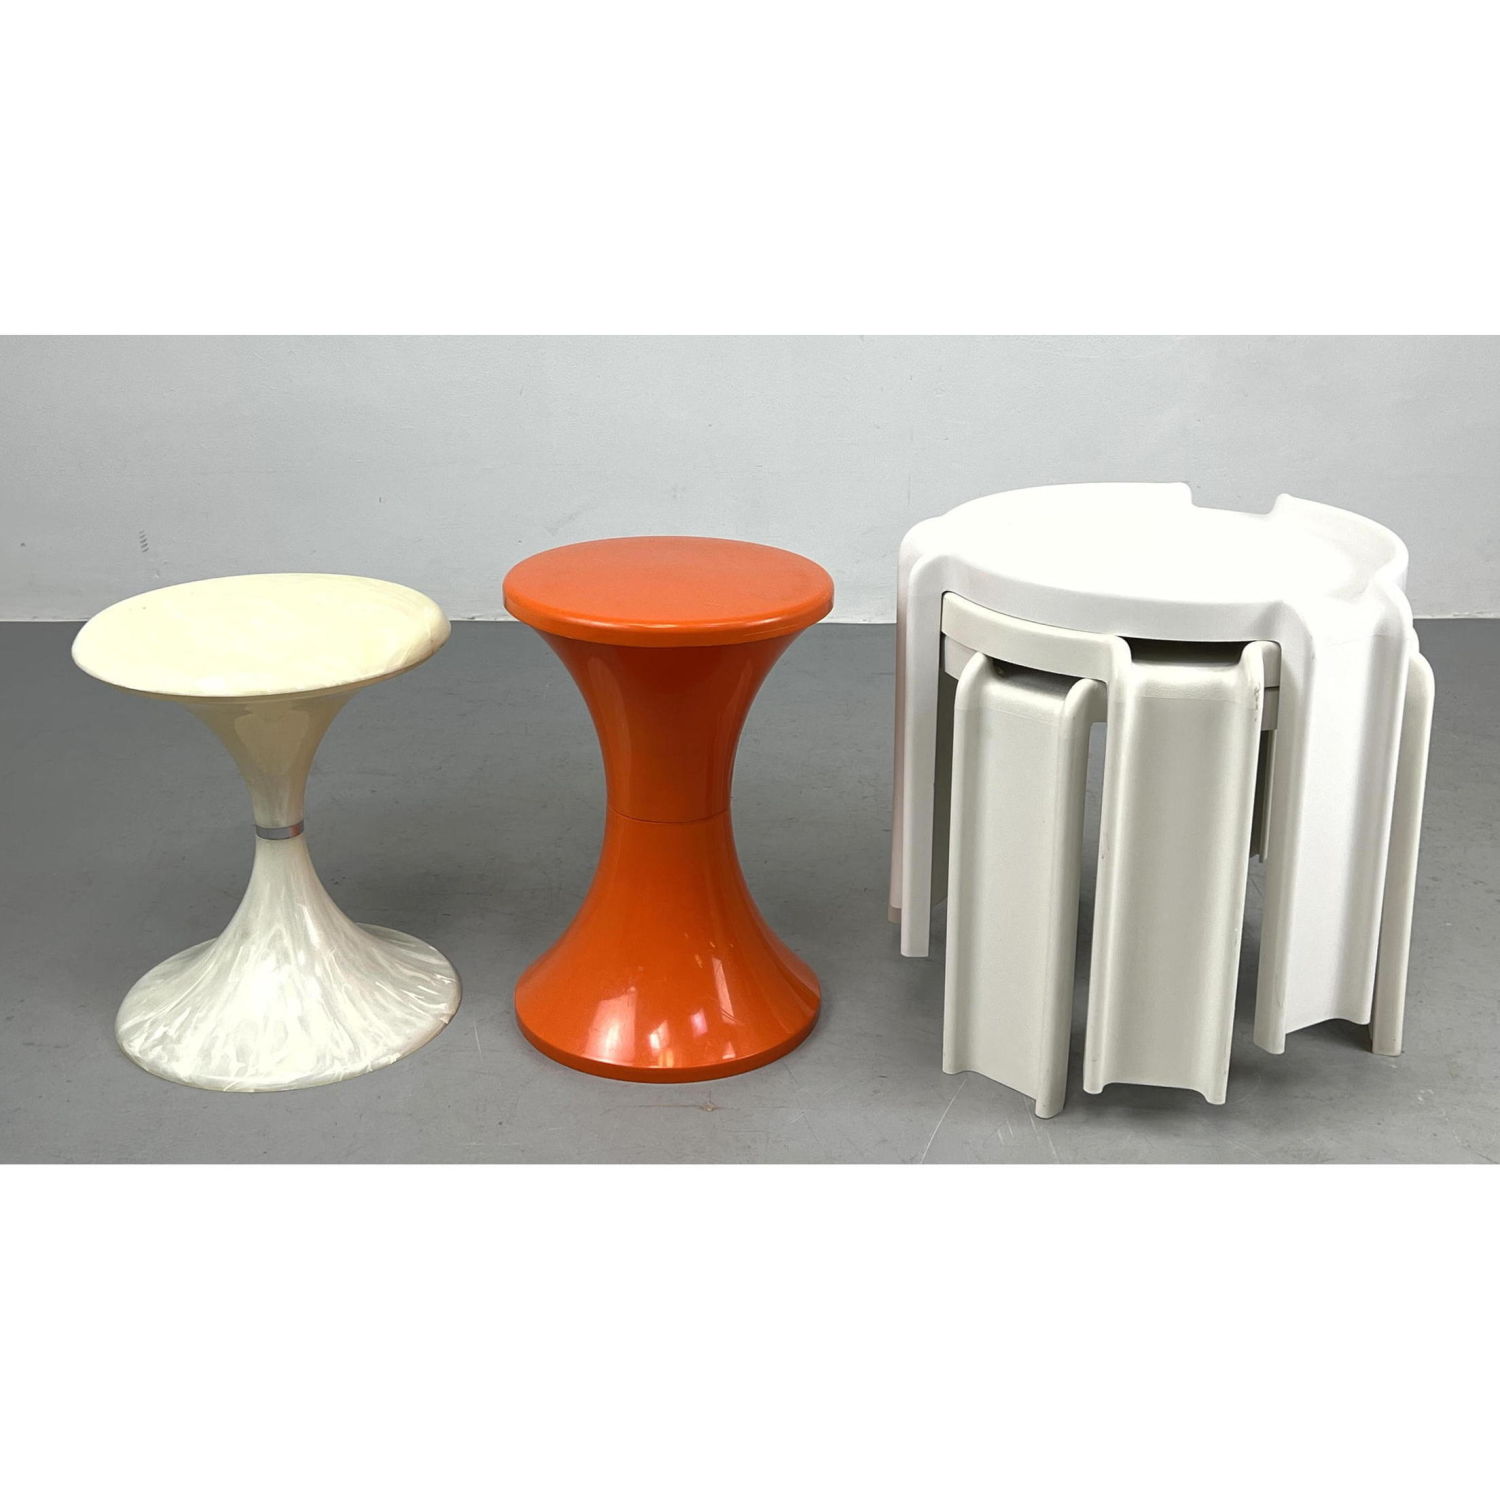 Pop Modernist Plastic Furniture.